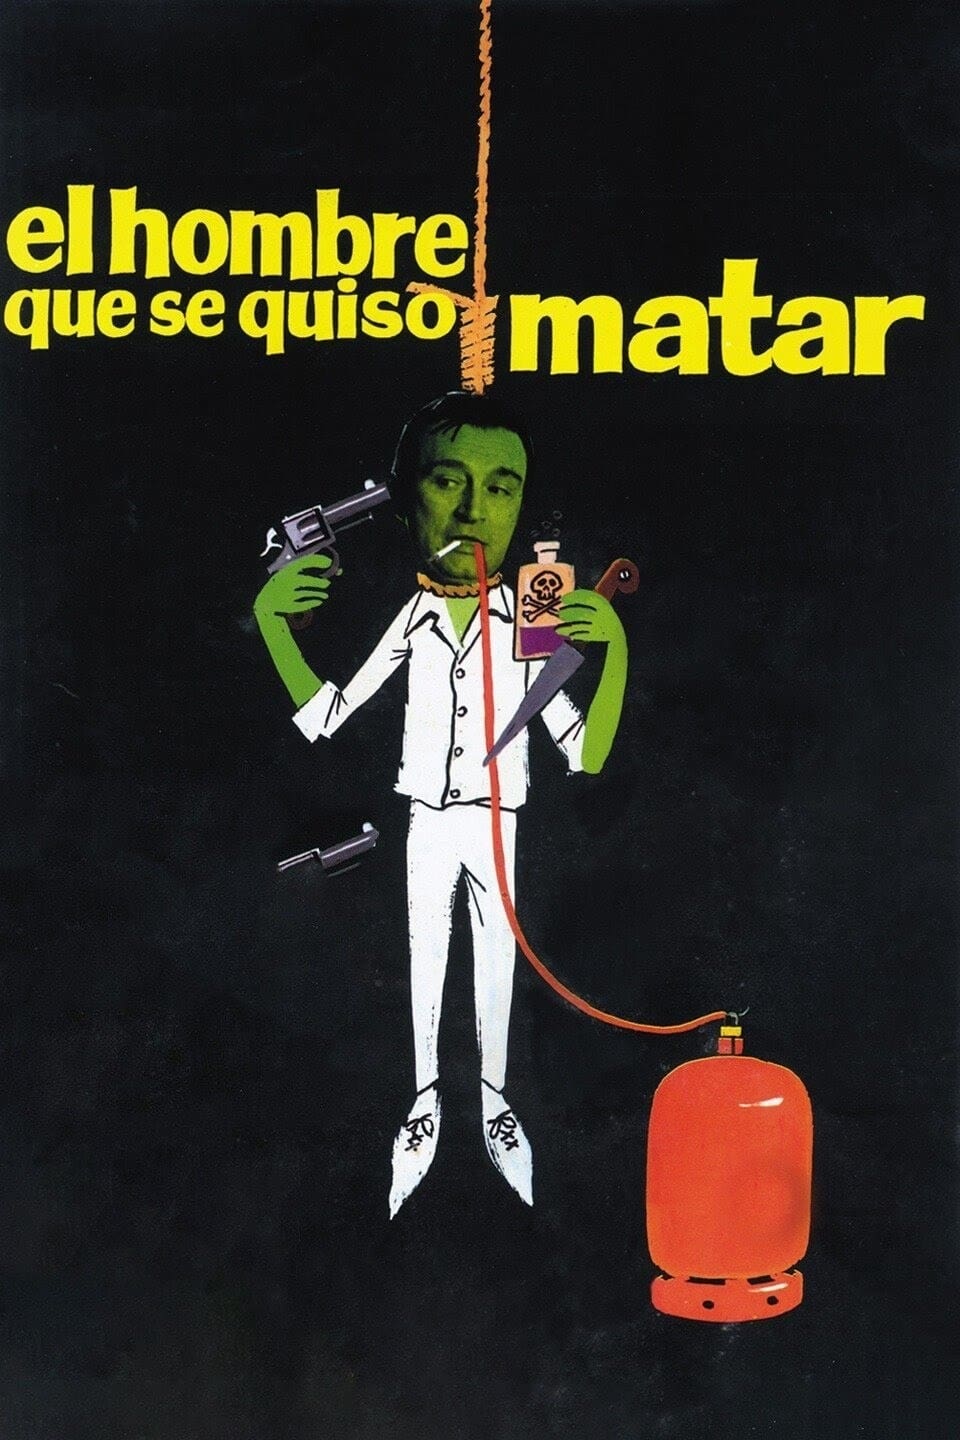 El hombre que se quiso matar (1970)